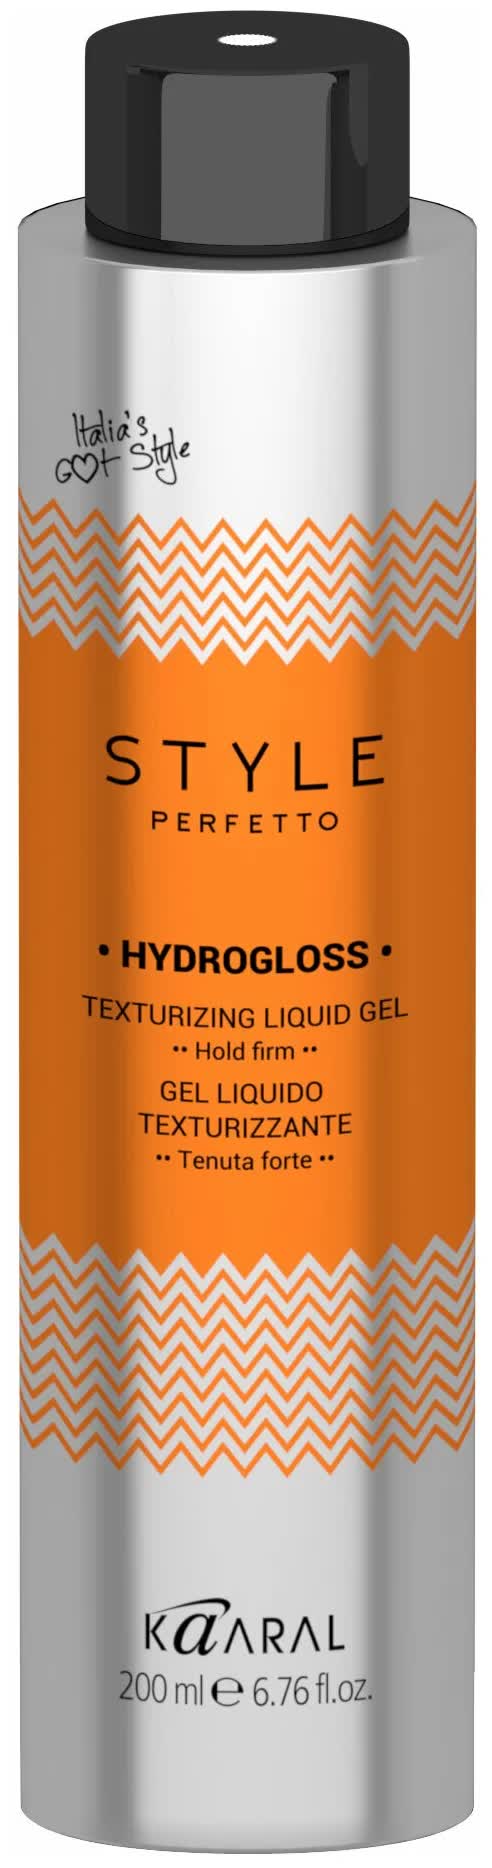 Жидкий гель для текстурирования волос KAARAL Style Perfetto Hydrogloss Texturizing Liquid Gel200мл